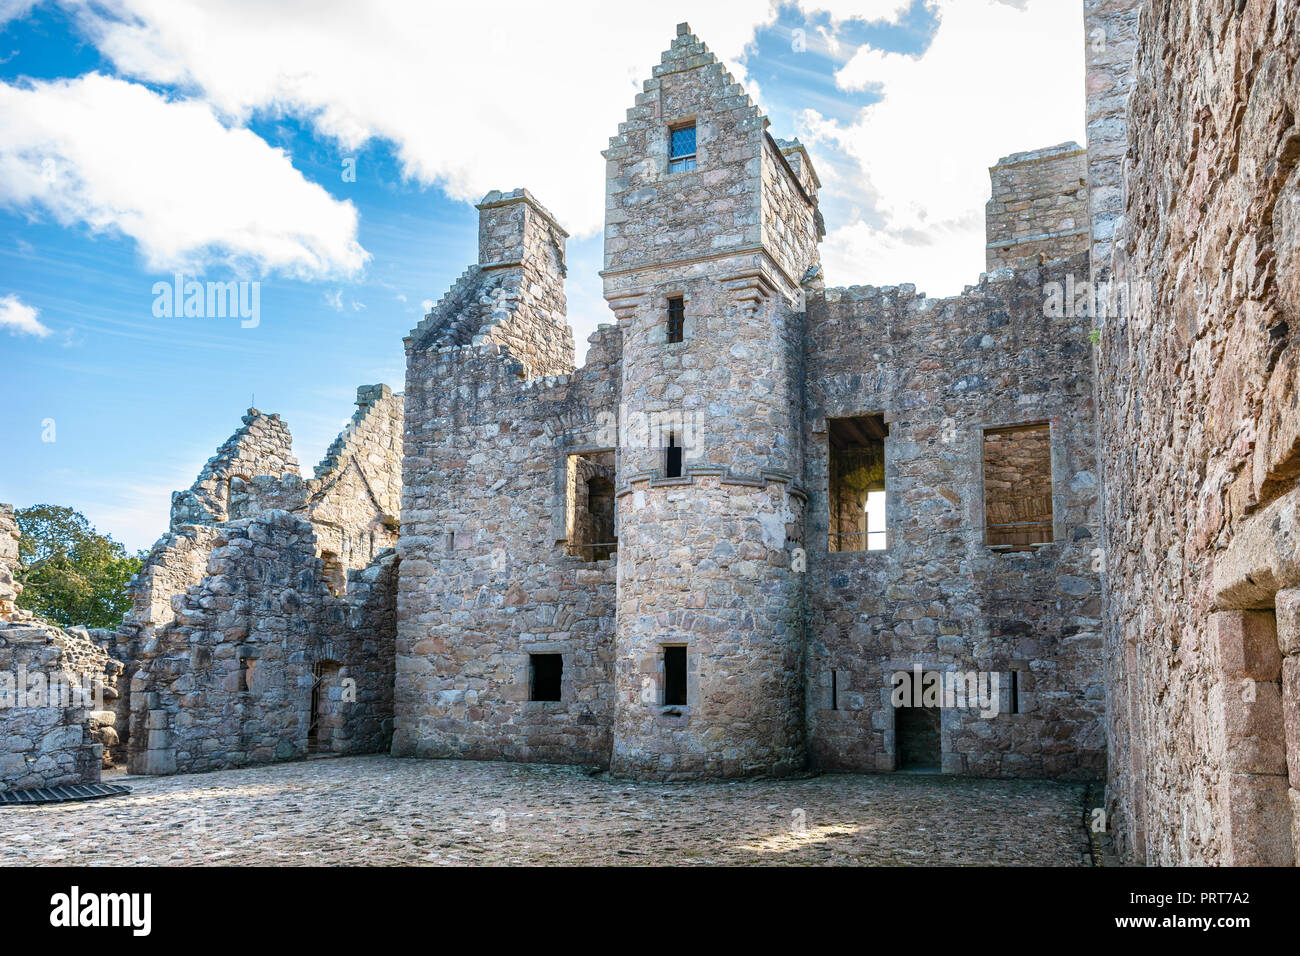 Tolquhon Castle, Aberdeenshire, Scotland Stock Photo